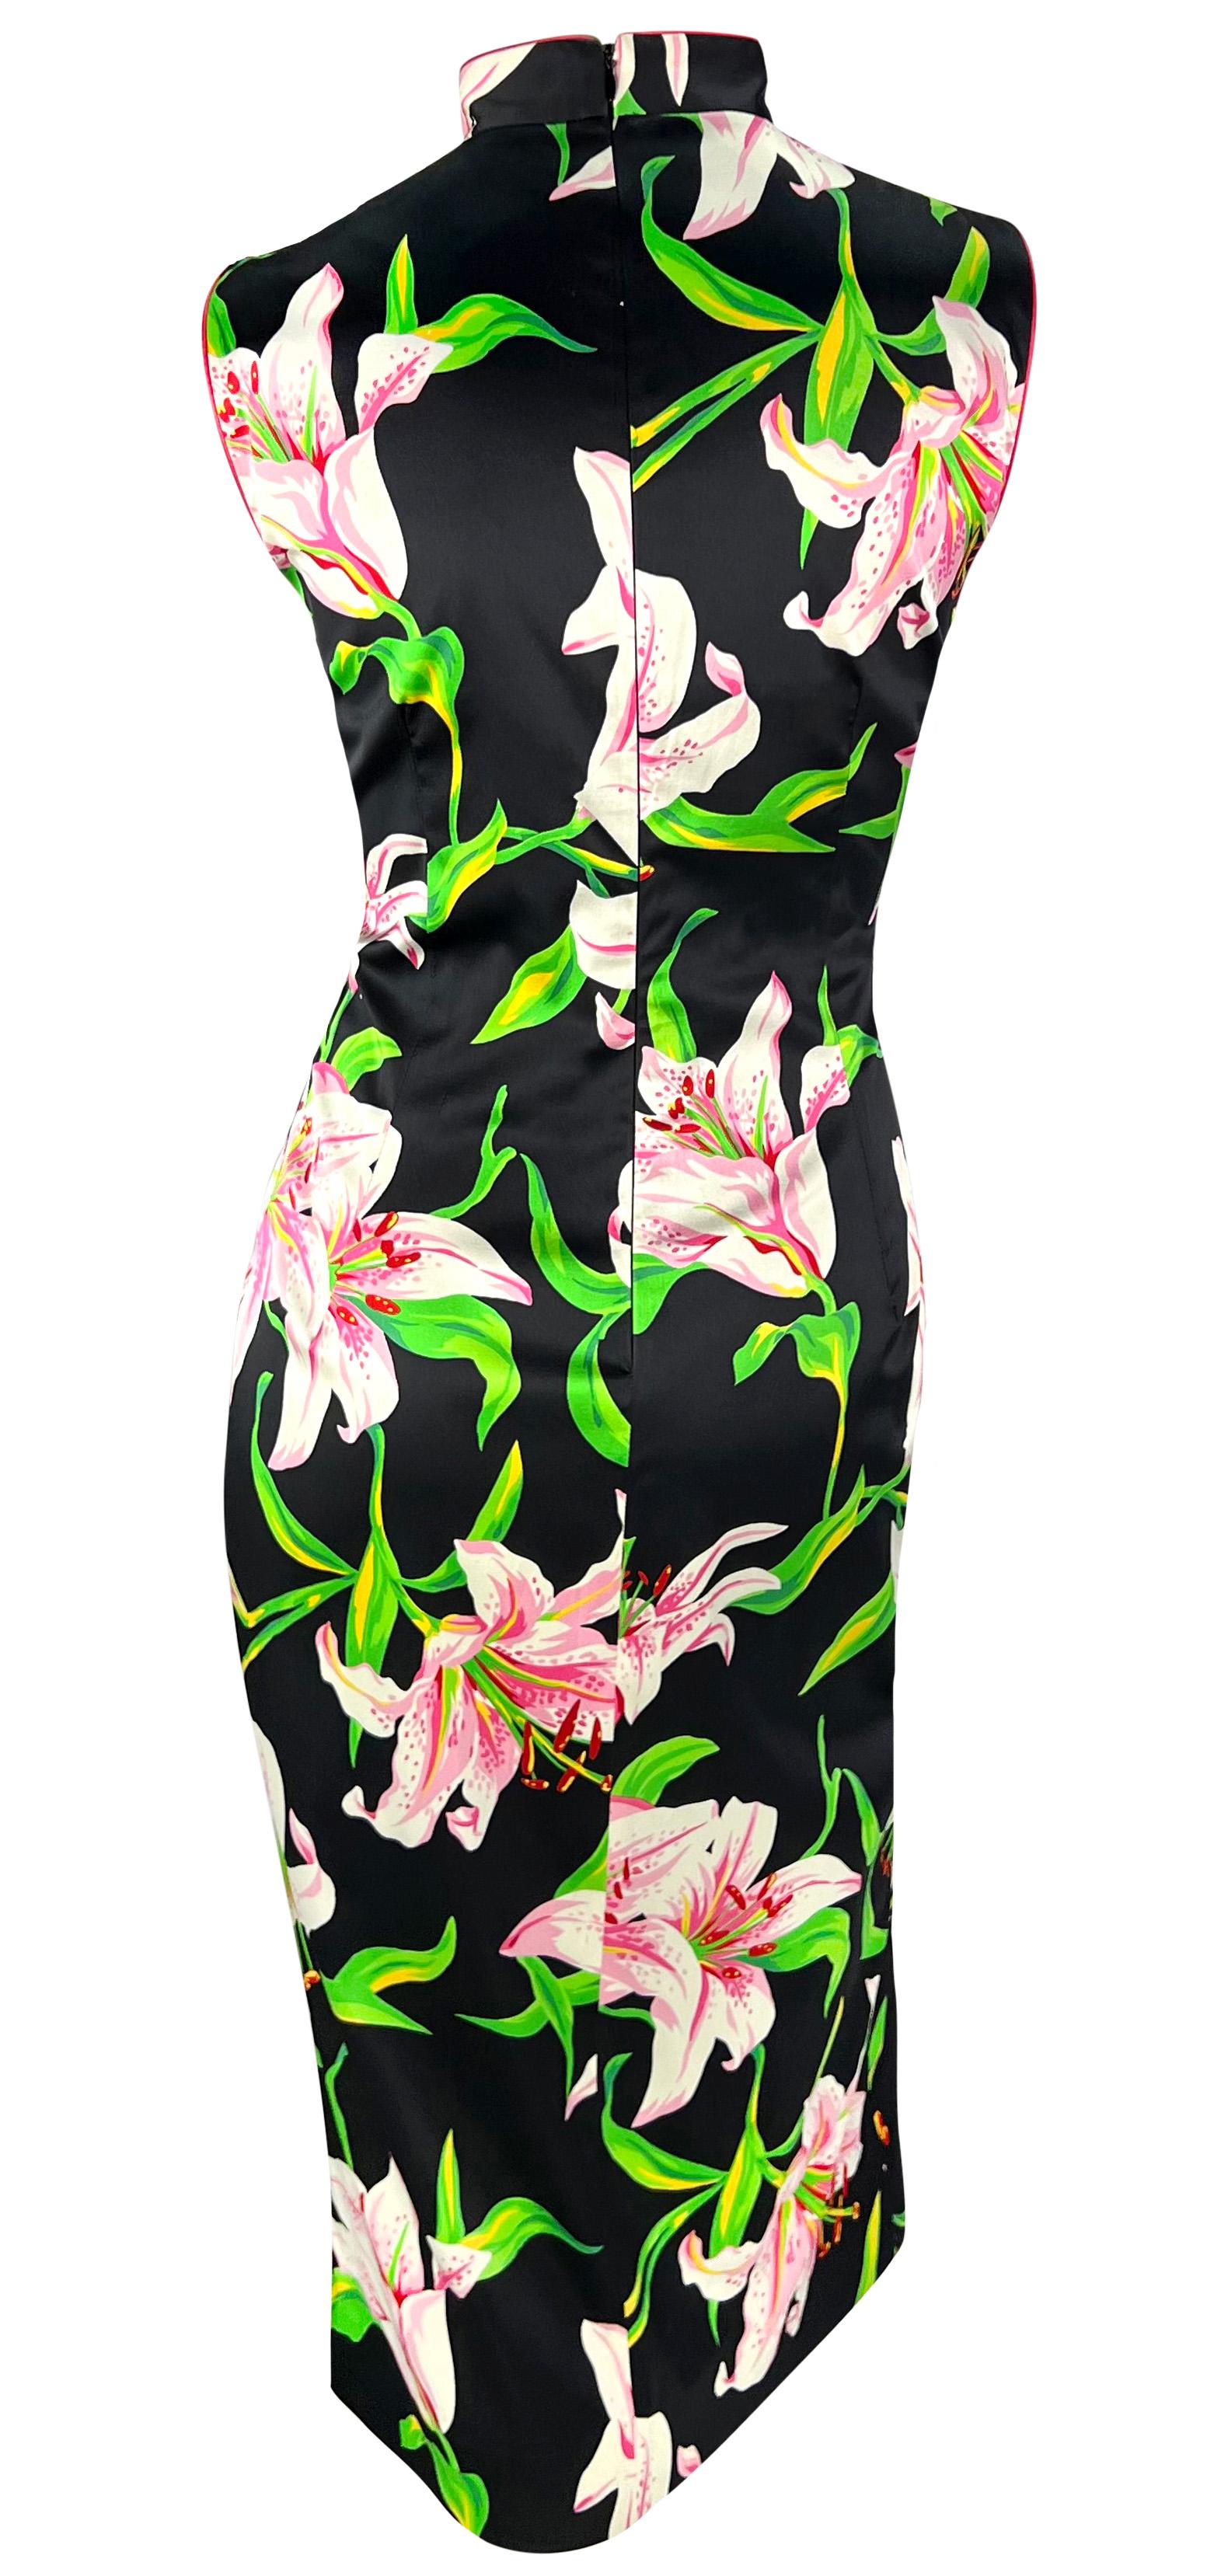 S/S 2001 Dolce & Gabbana Black Pink Lilly Print Bodycon Satin Sleeveless Dress For Sale 1